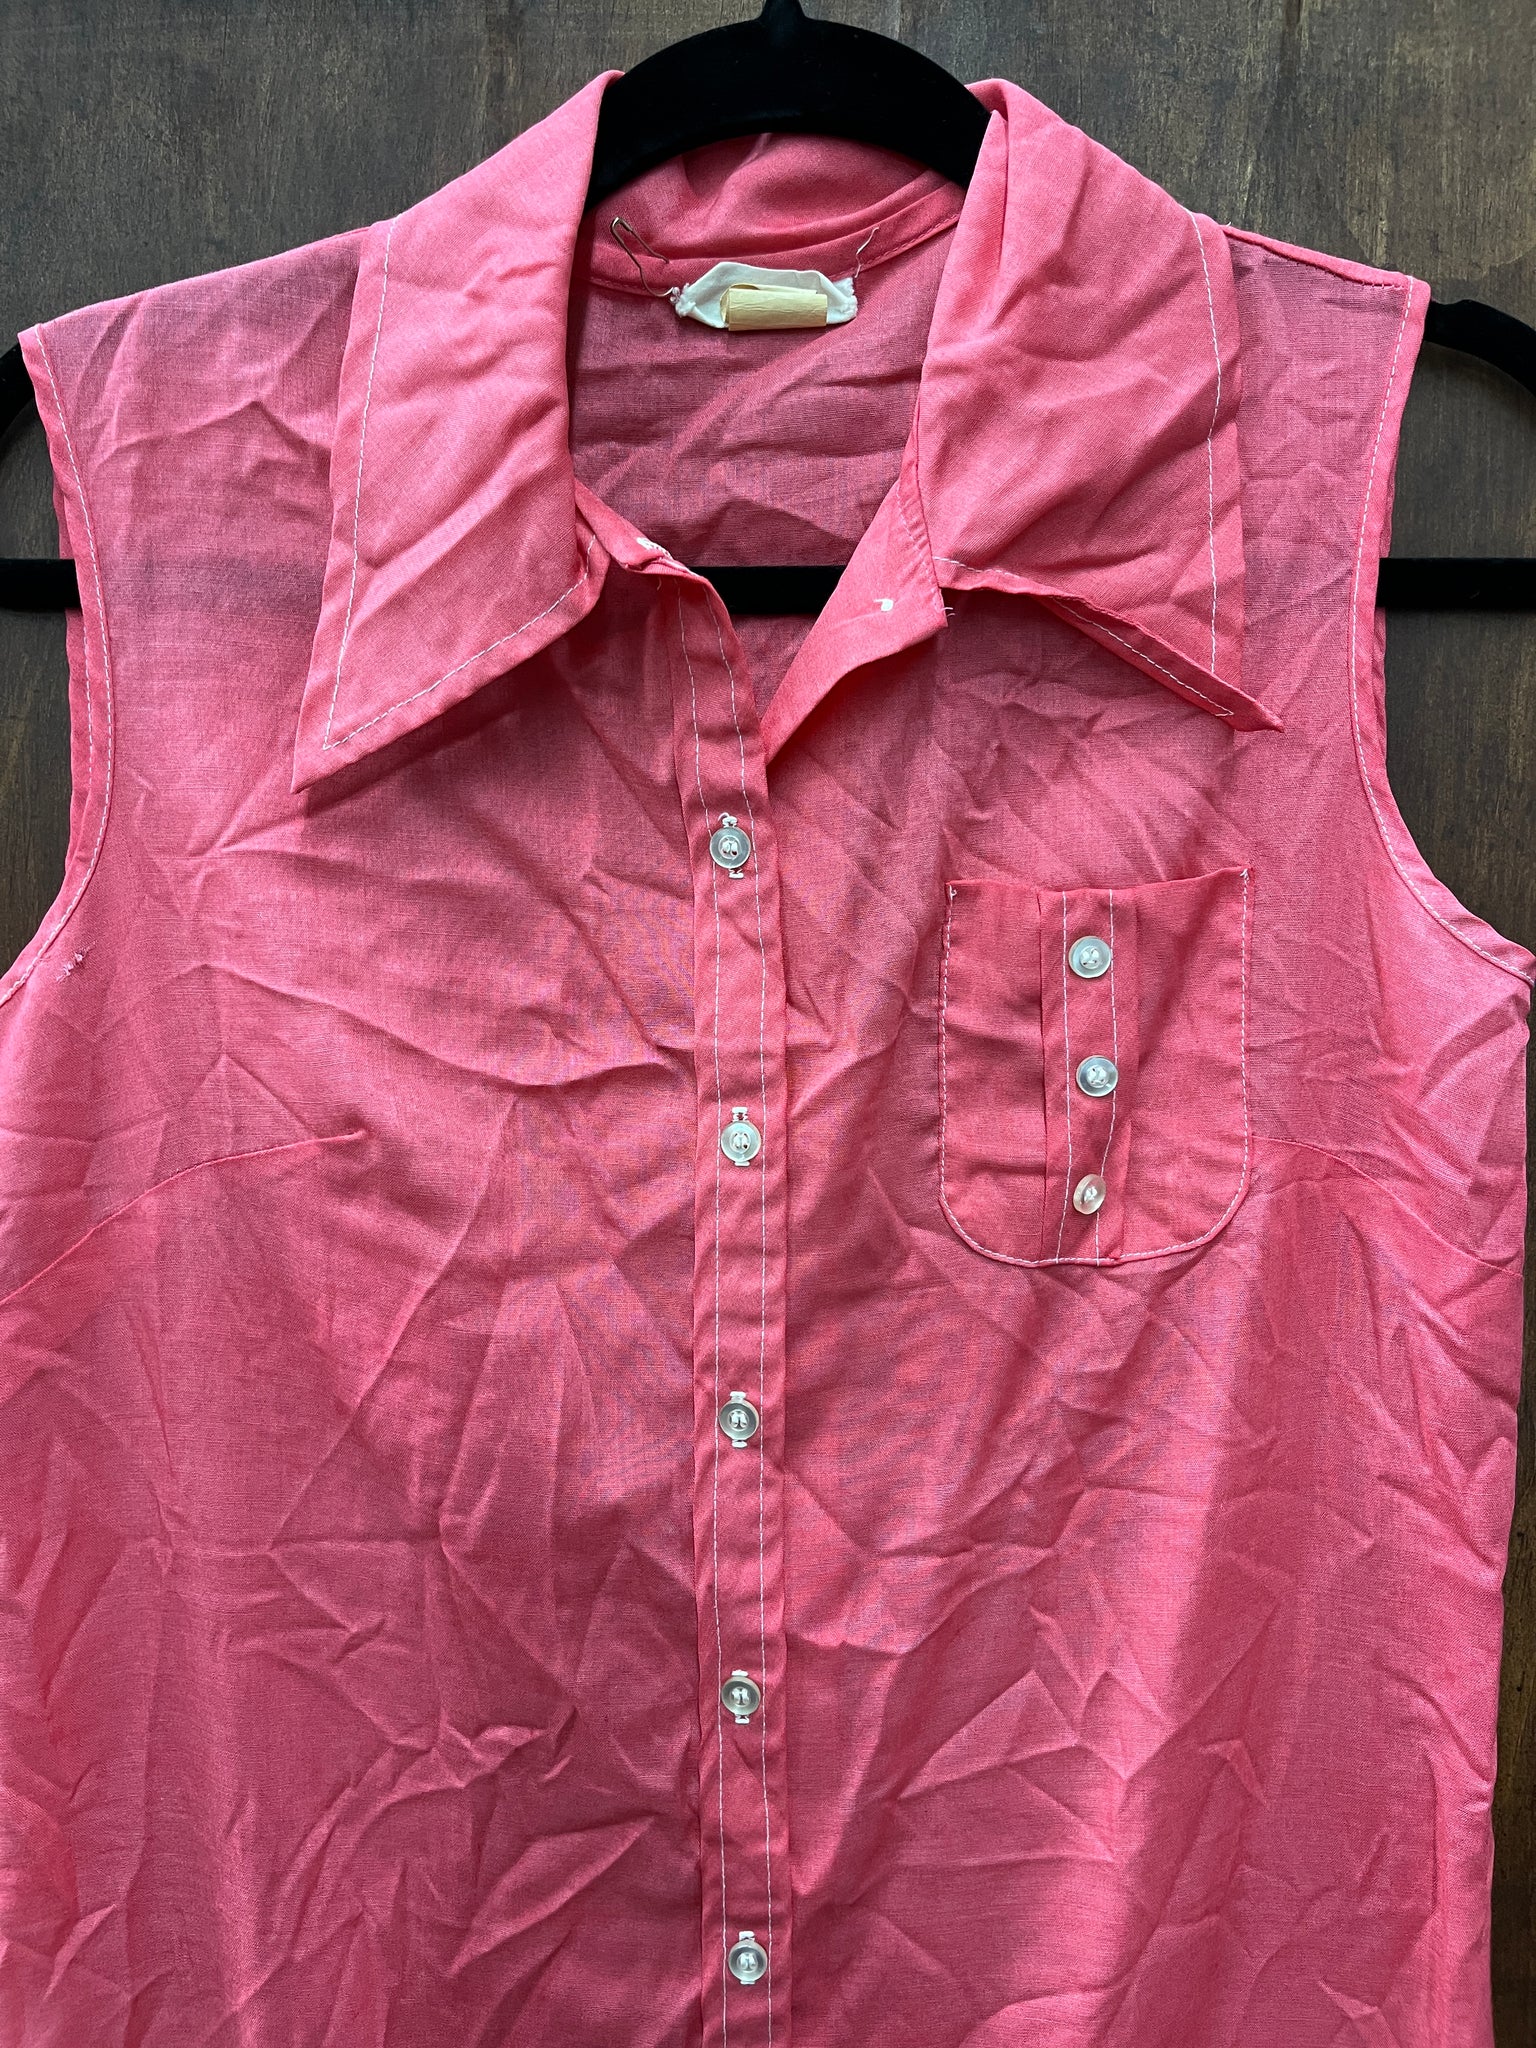 1960S DRESS- raspberry pink sleeveless shirtdress